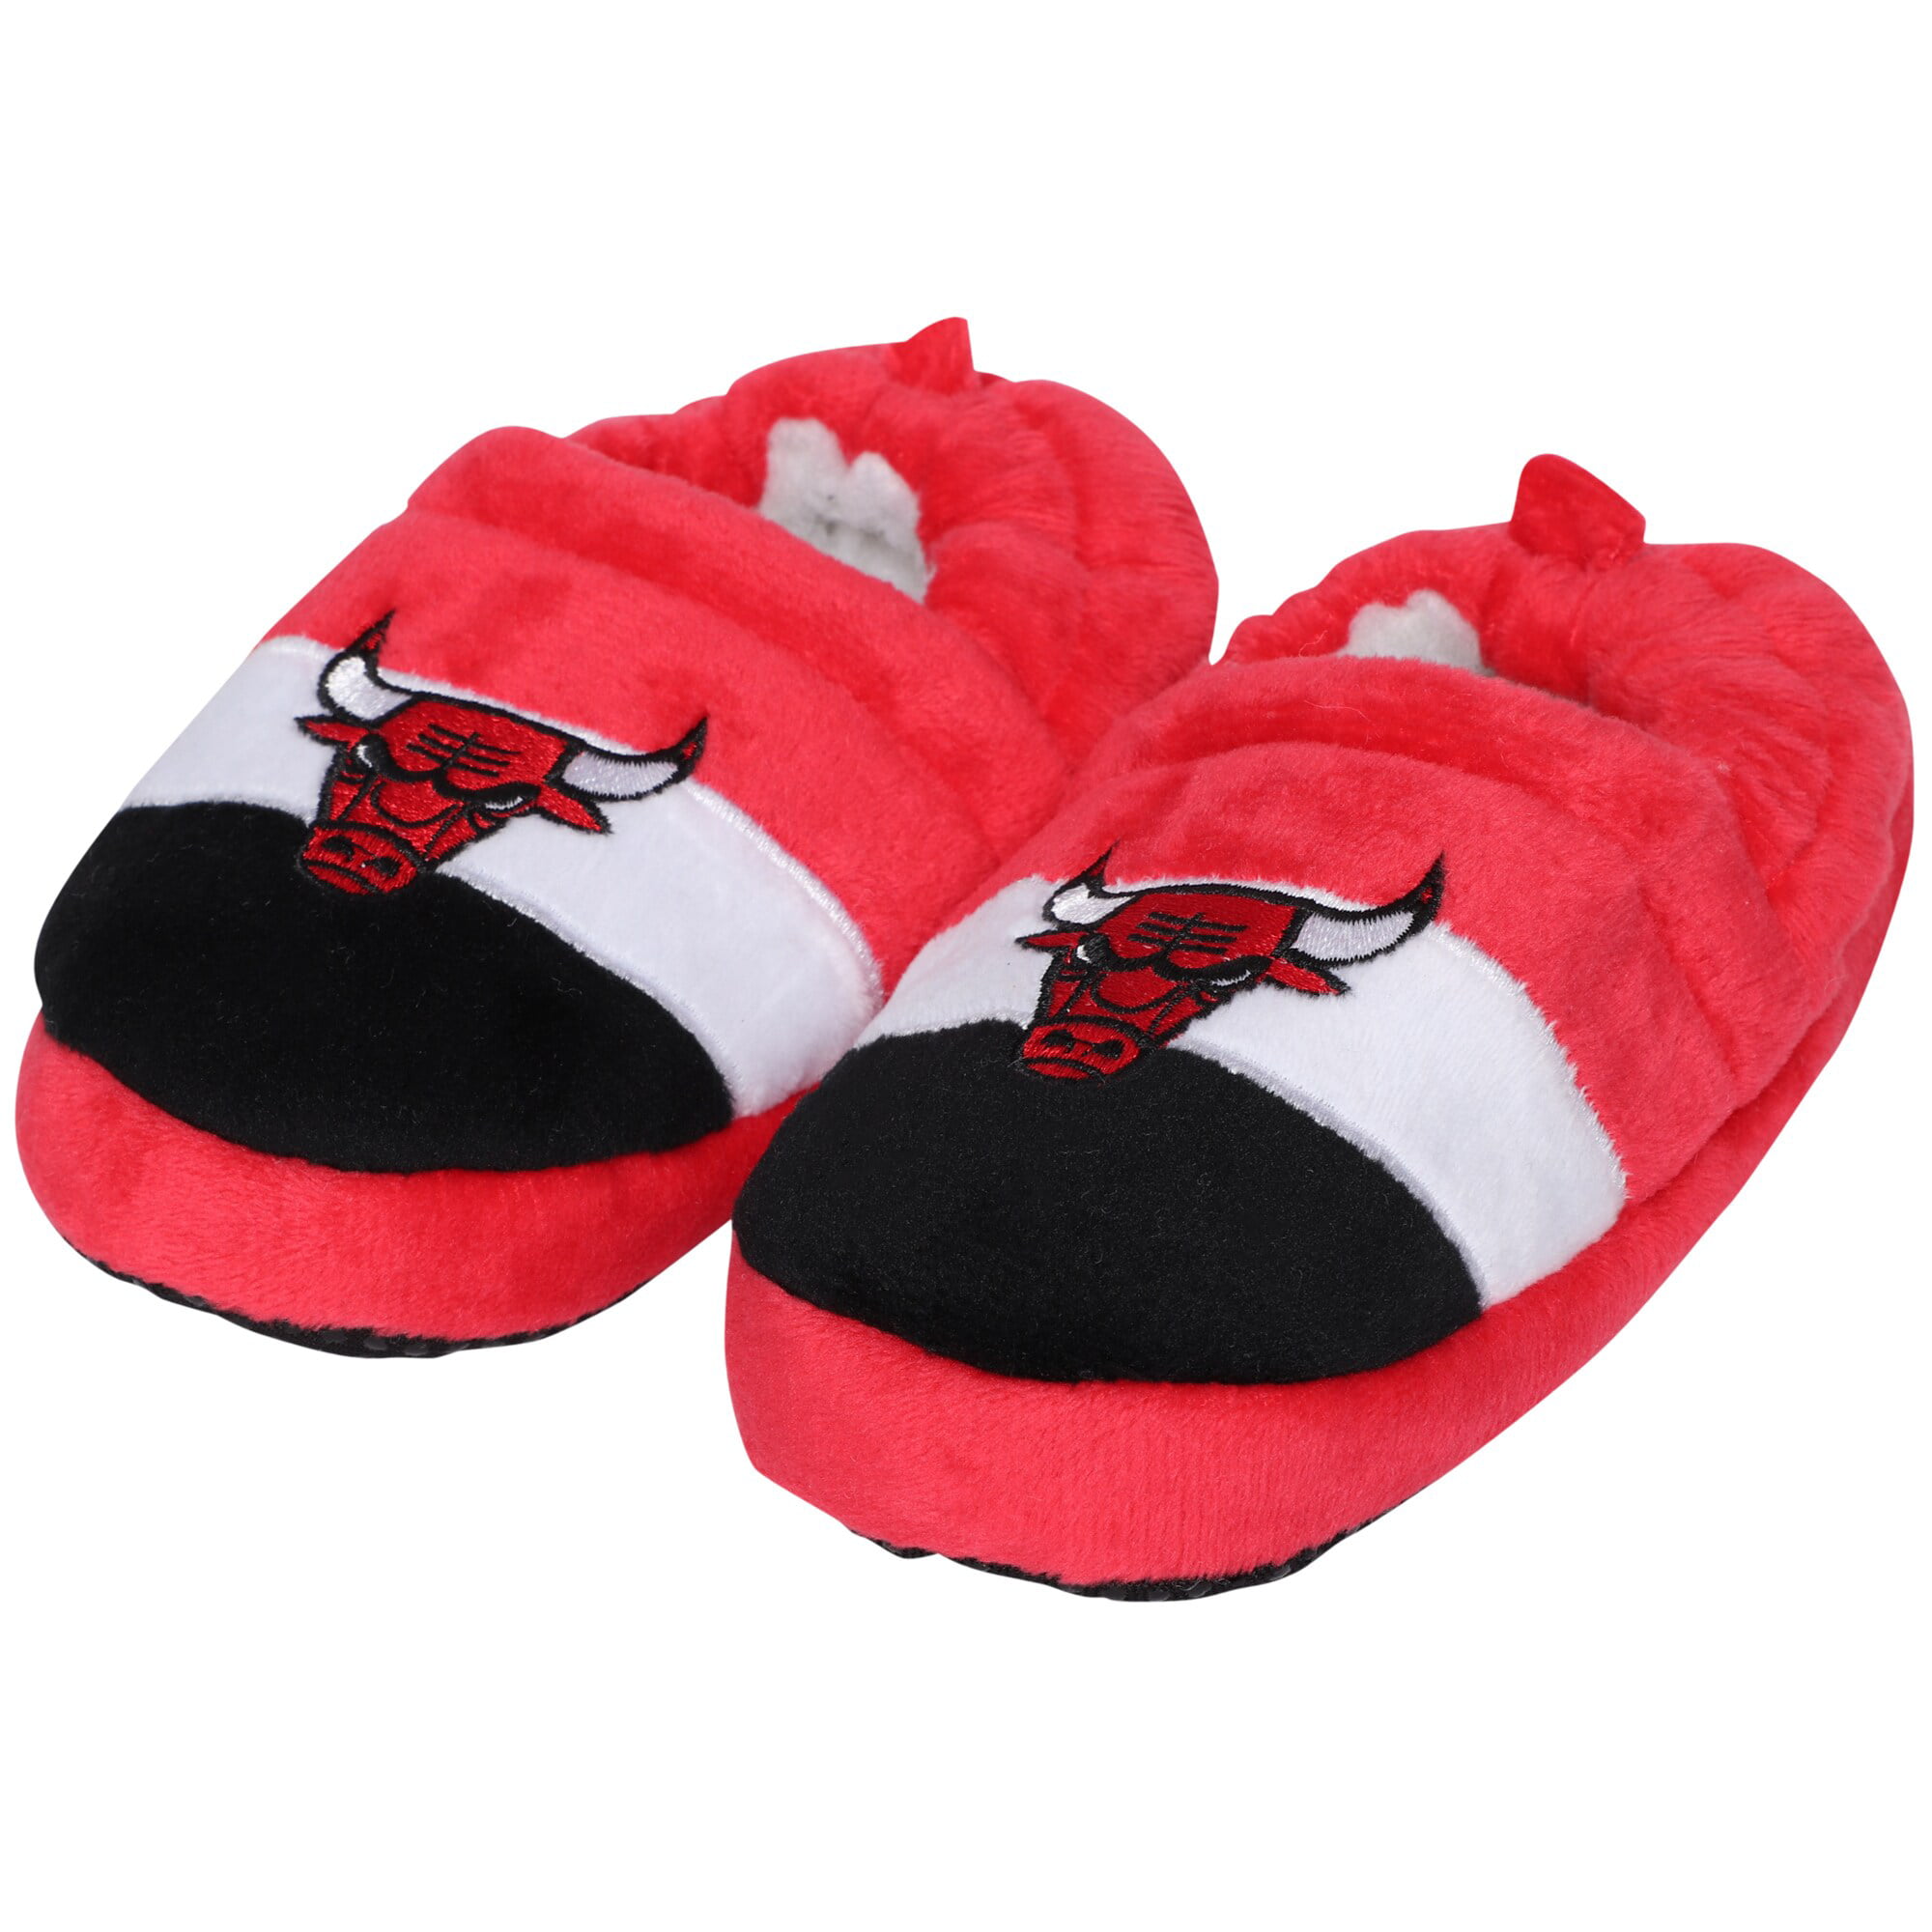 chicago bears slippers walmart